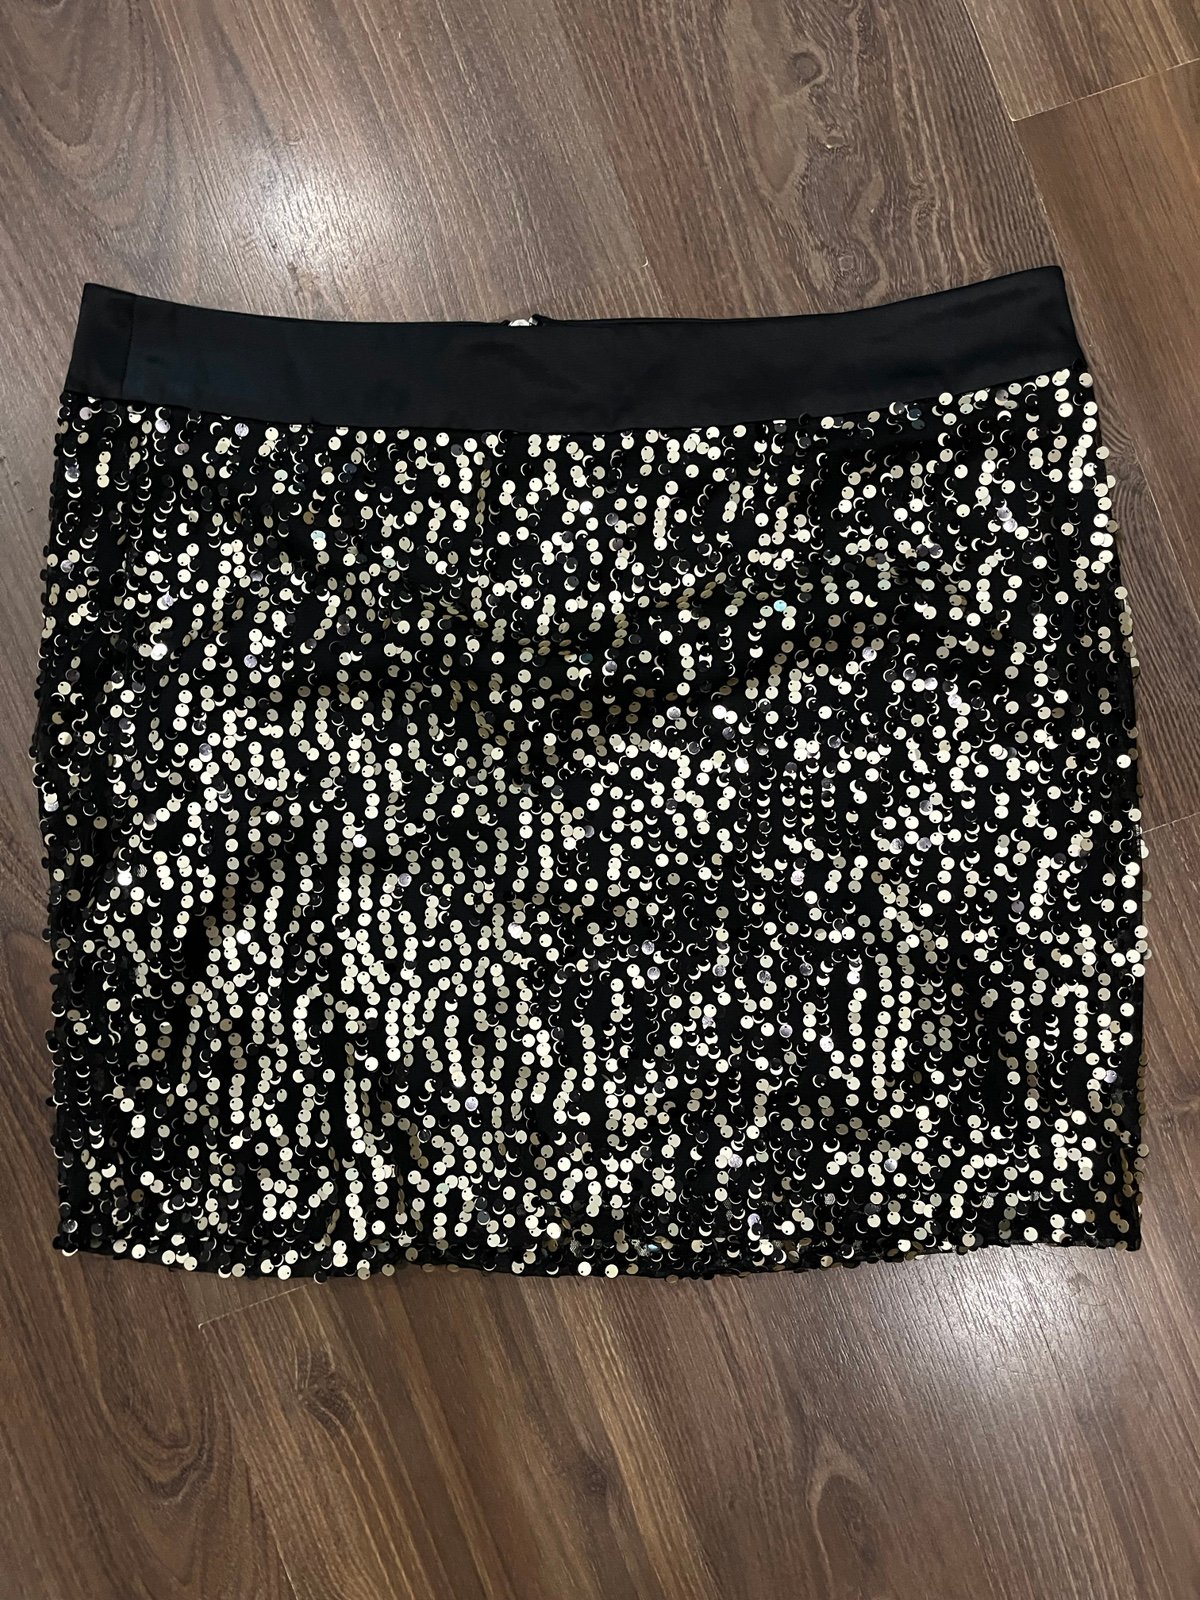 Stylish Black & Gold Sequinn Skirt iSk6Tszut Discount